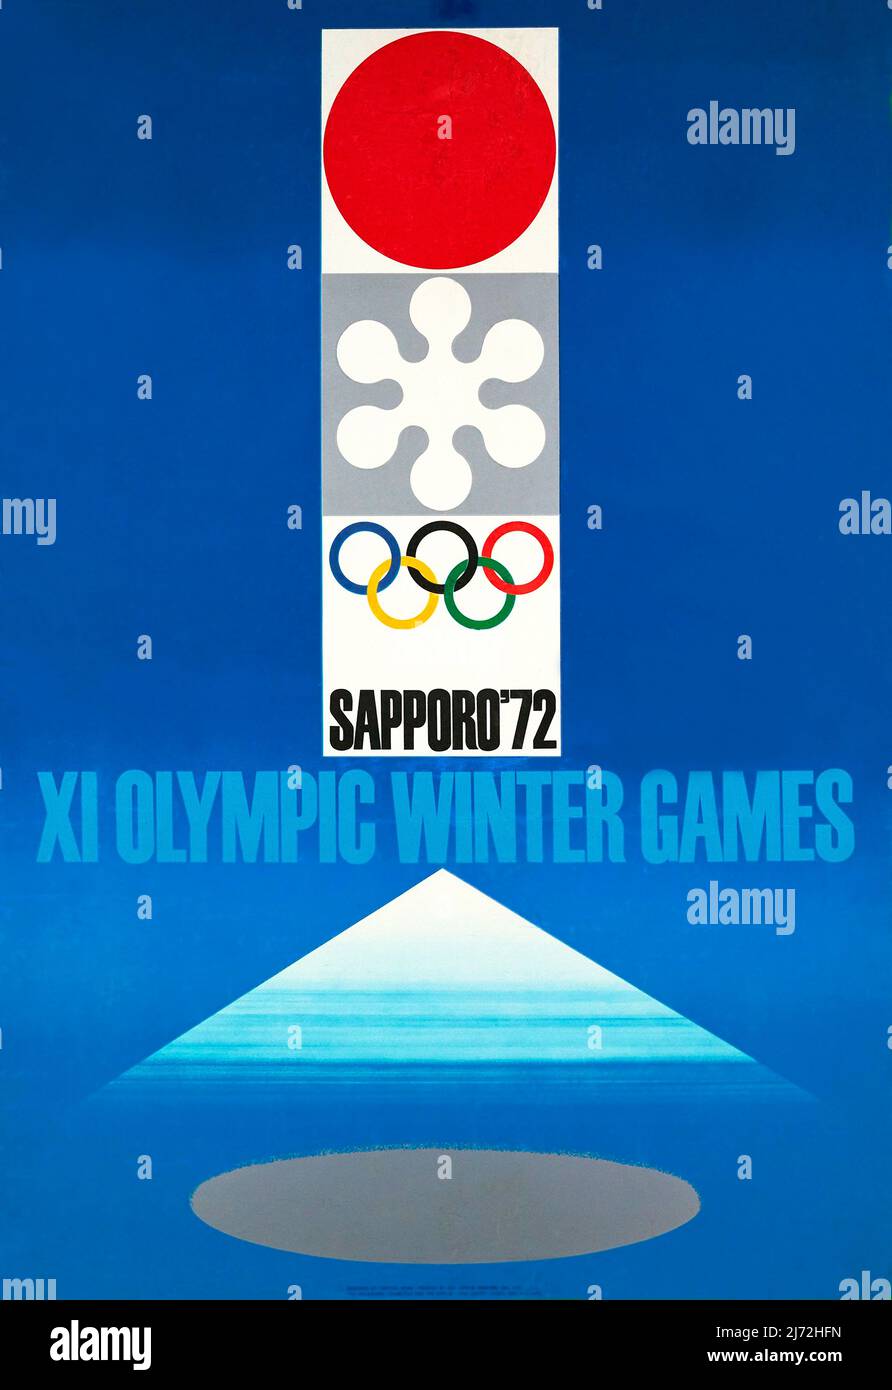 WINTER-Olympiade IM JAHR 1972 Poster XI Winter Games, Sapporo 72 Kono TAKASHI 1972 Stockfoto